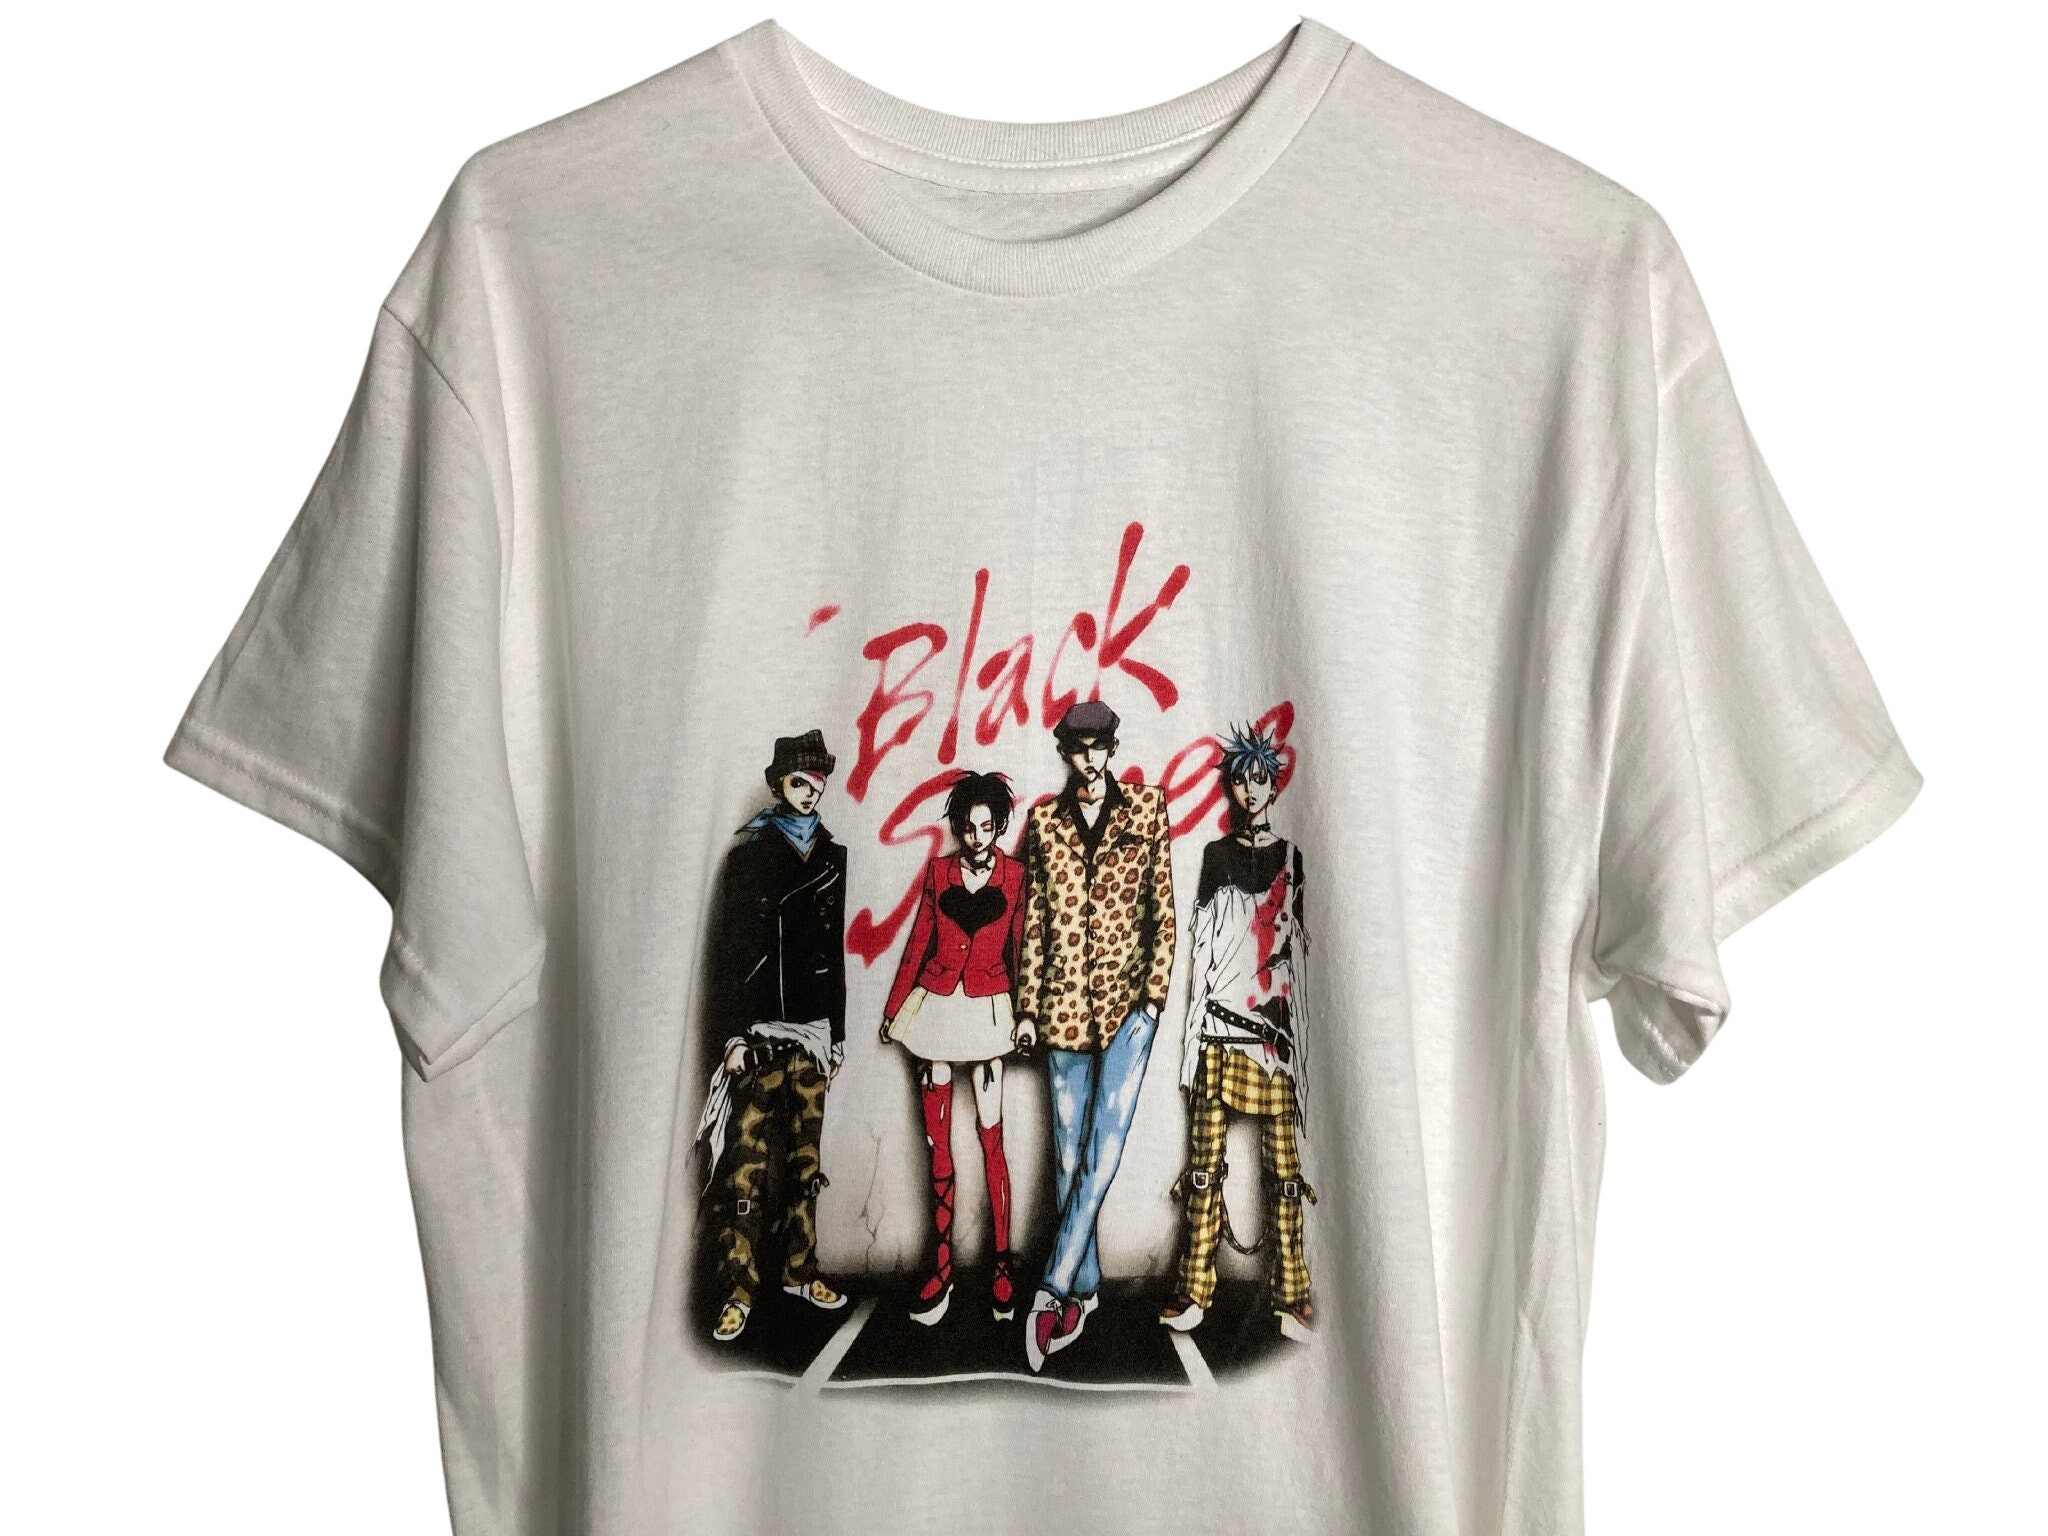 Anime T Shirts Online  Anime T Shirts for Men  Bushirt